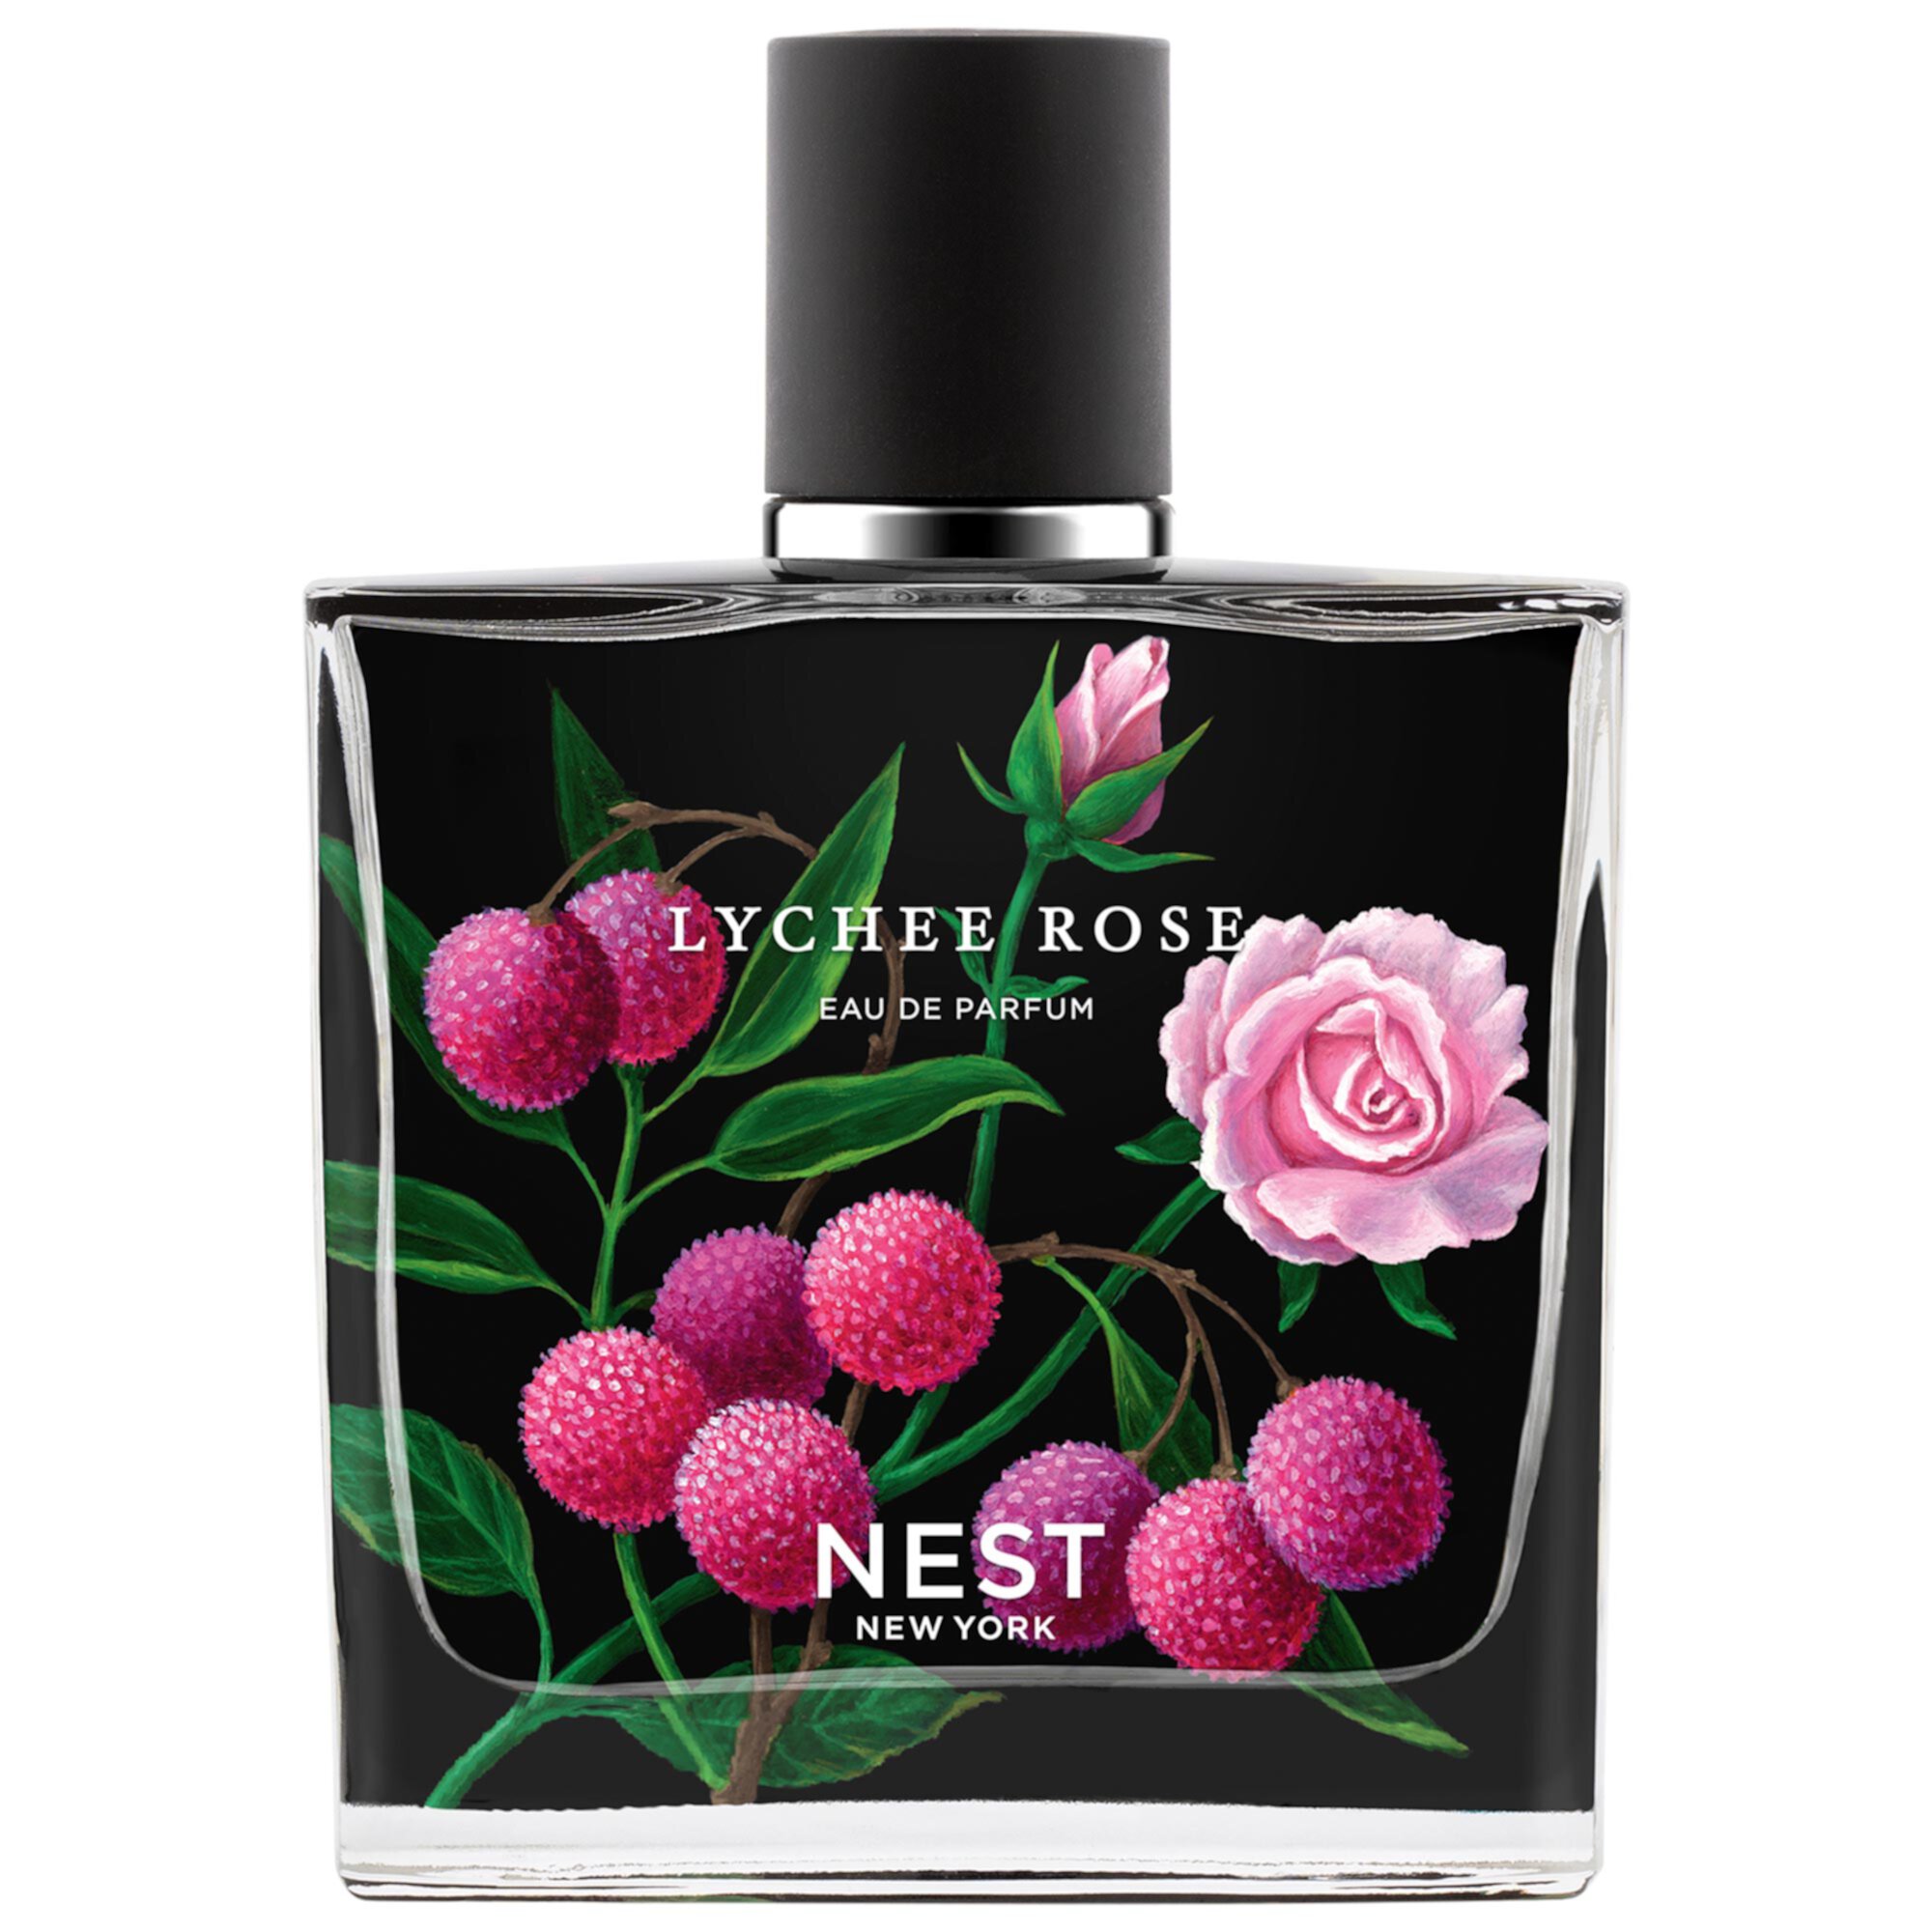 Lychee Rose Eau de Parfum Nest New York